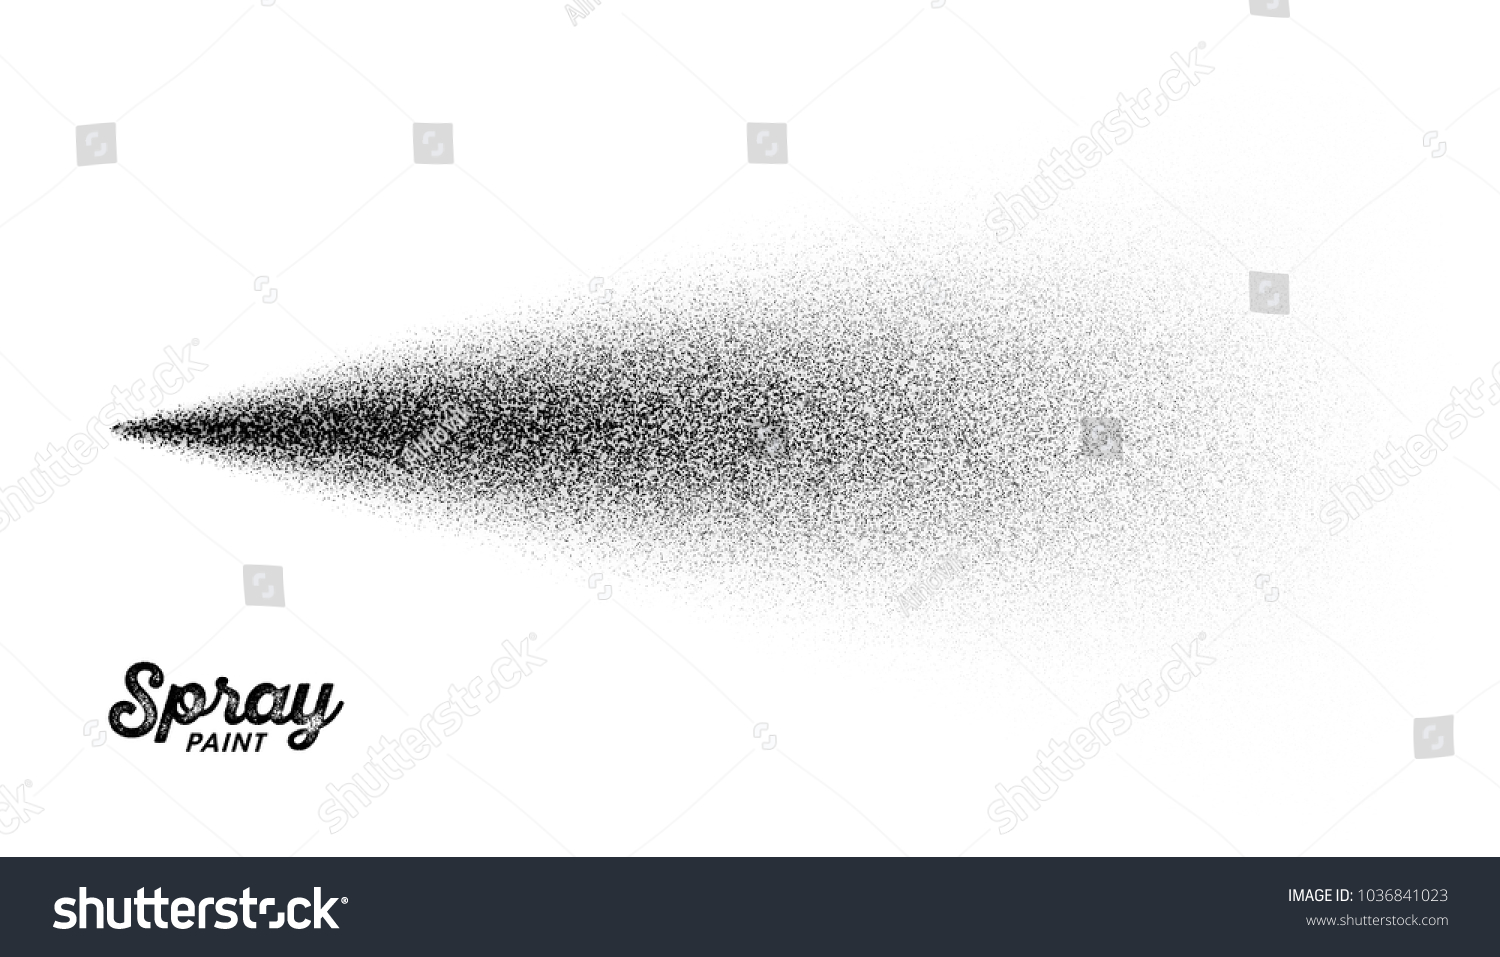 SVG of Spray paint or spray mist effect, vector illustration svg